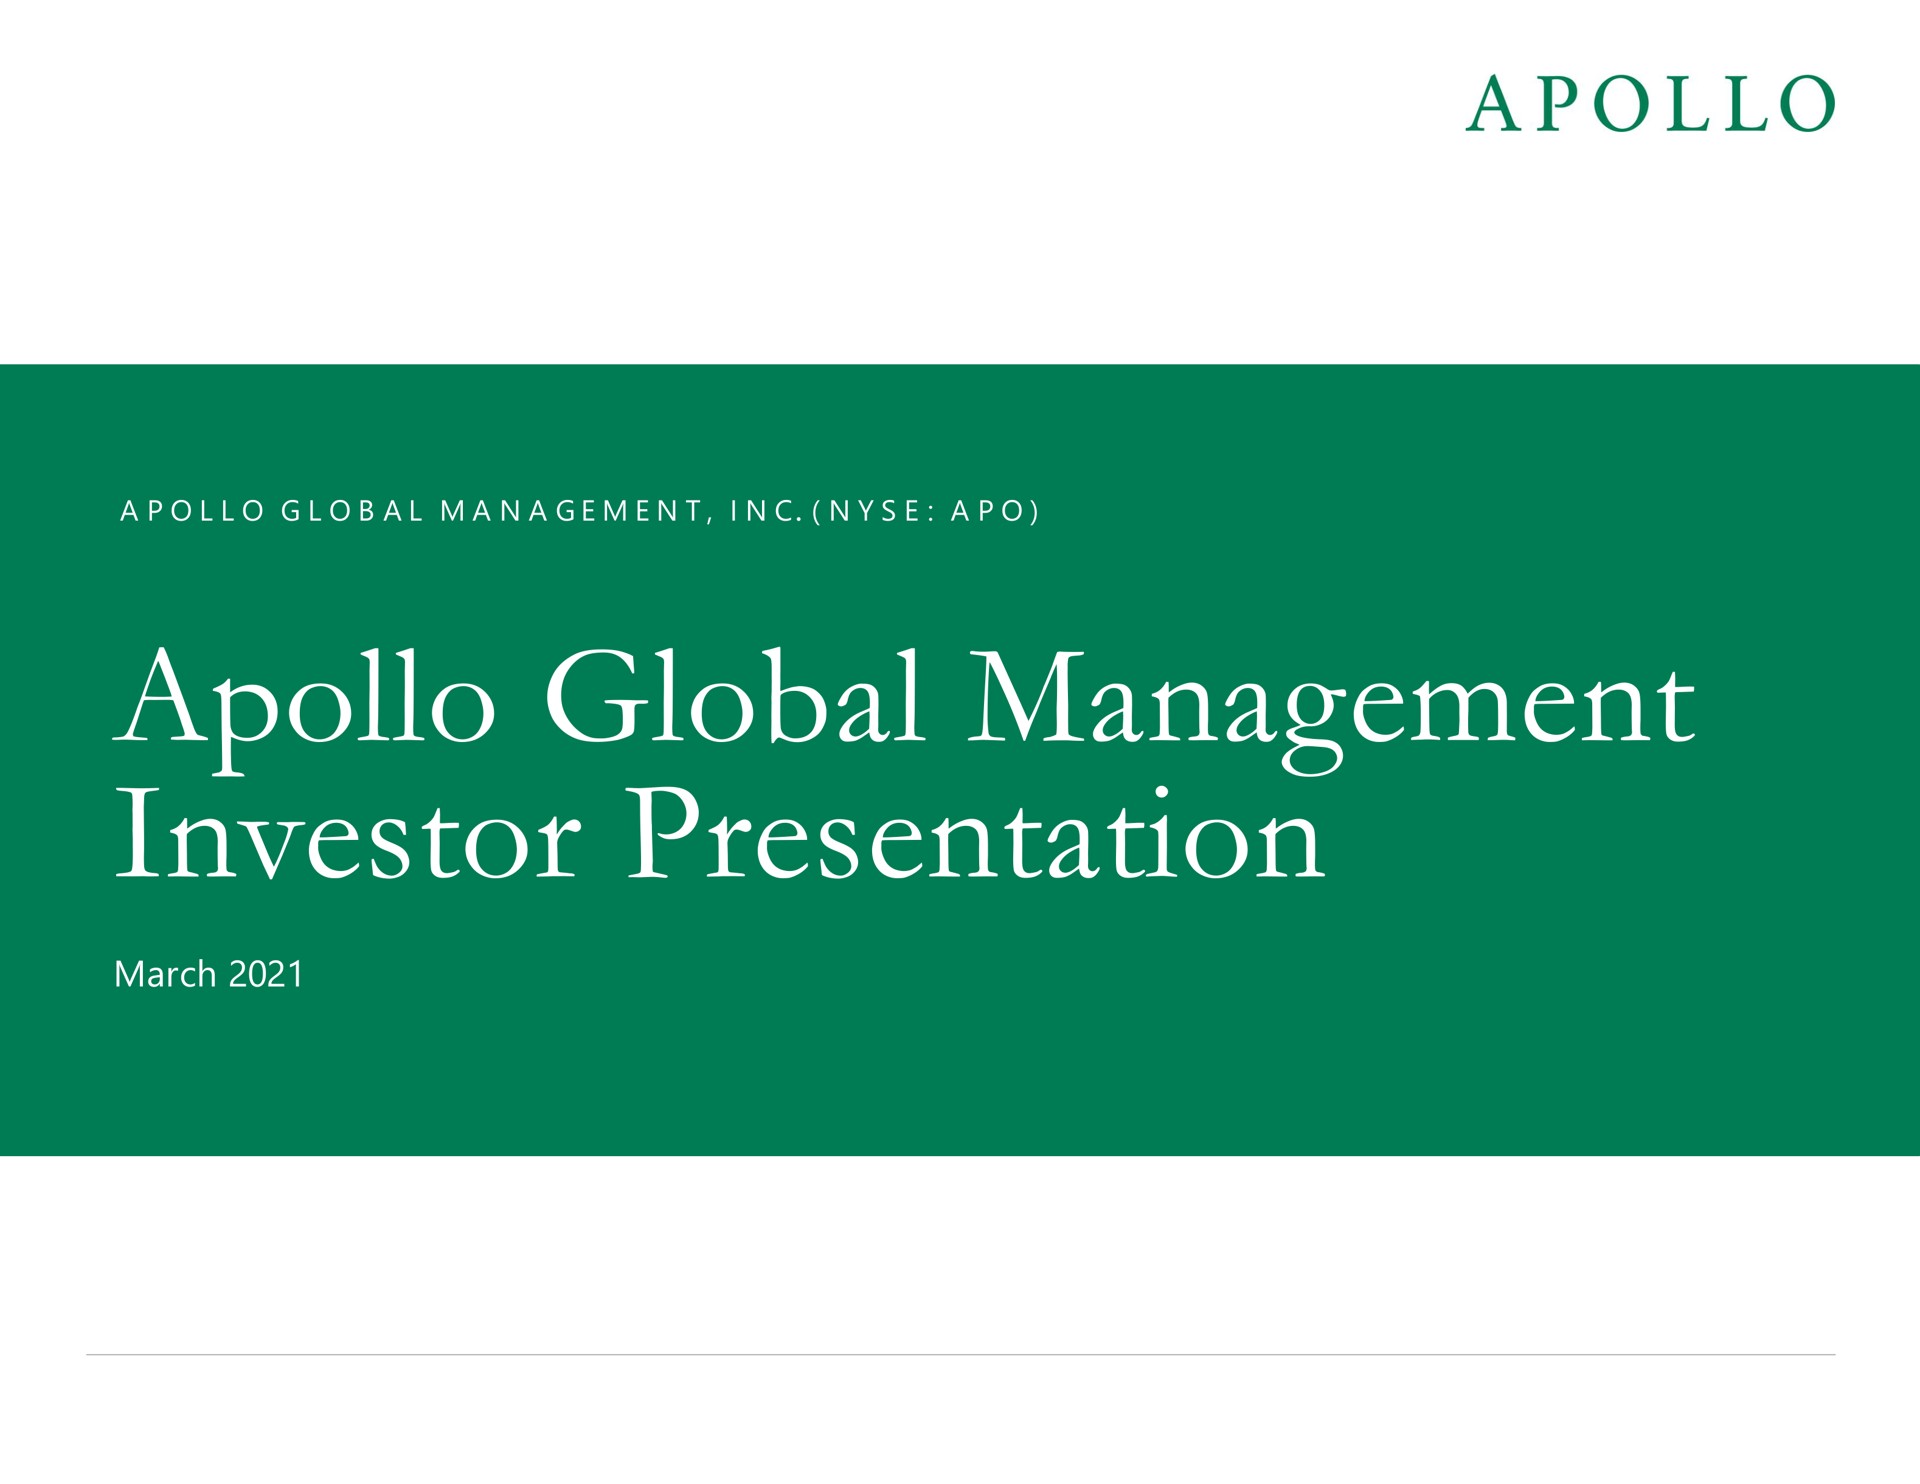 global management investor presentation march | Apollo Global Management